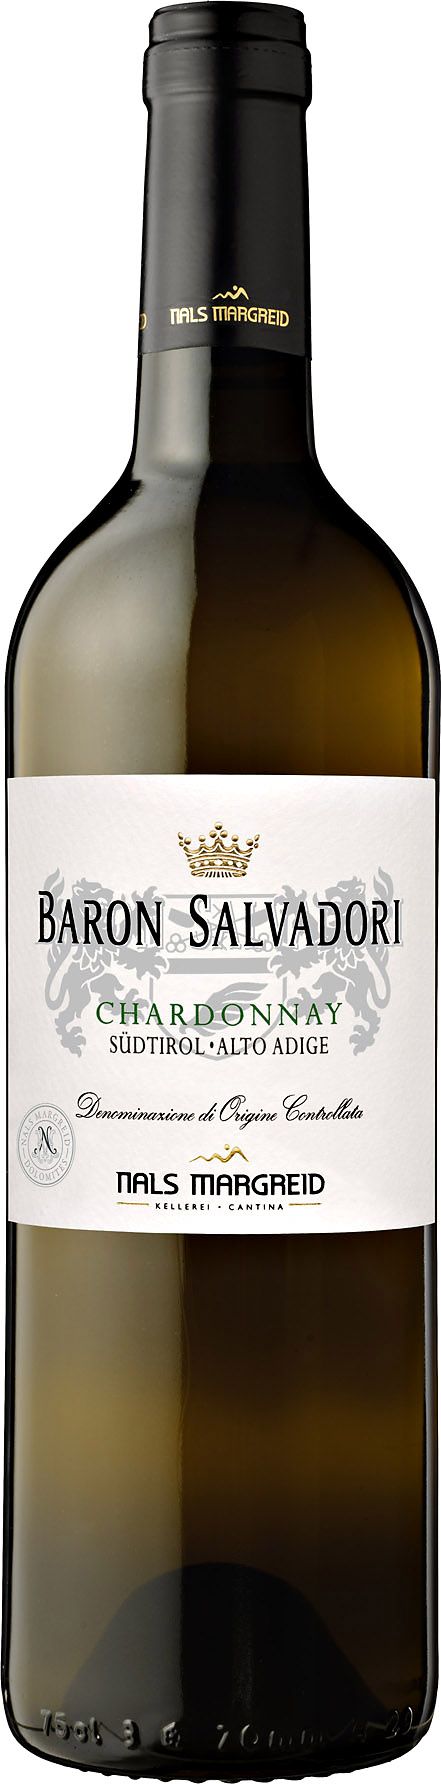 Nals Margreid, Baron Salvadori Chardonnay, 2014